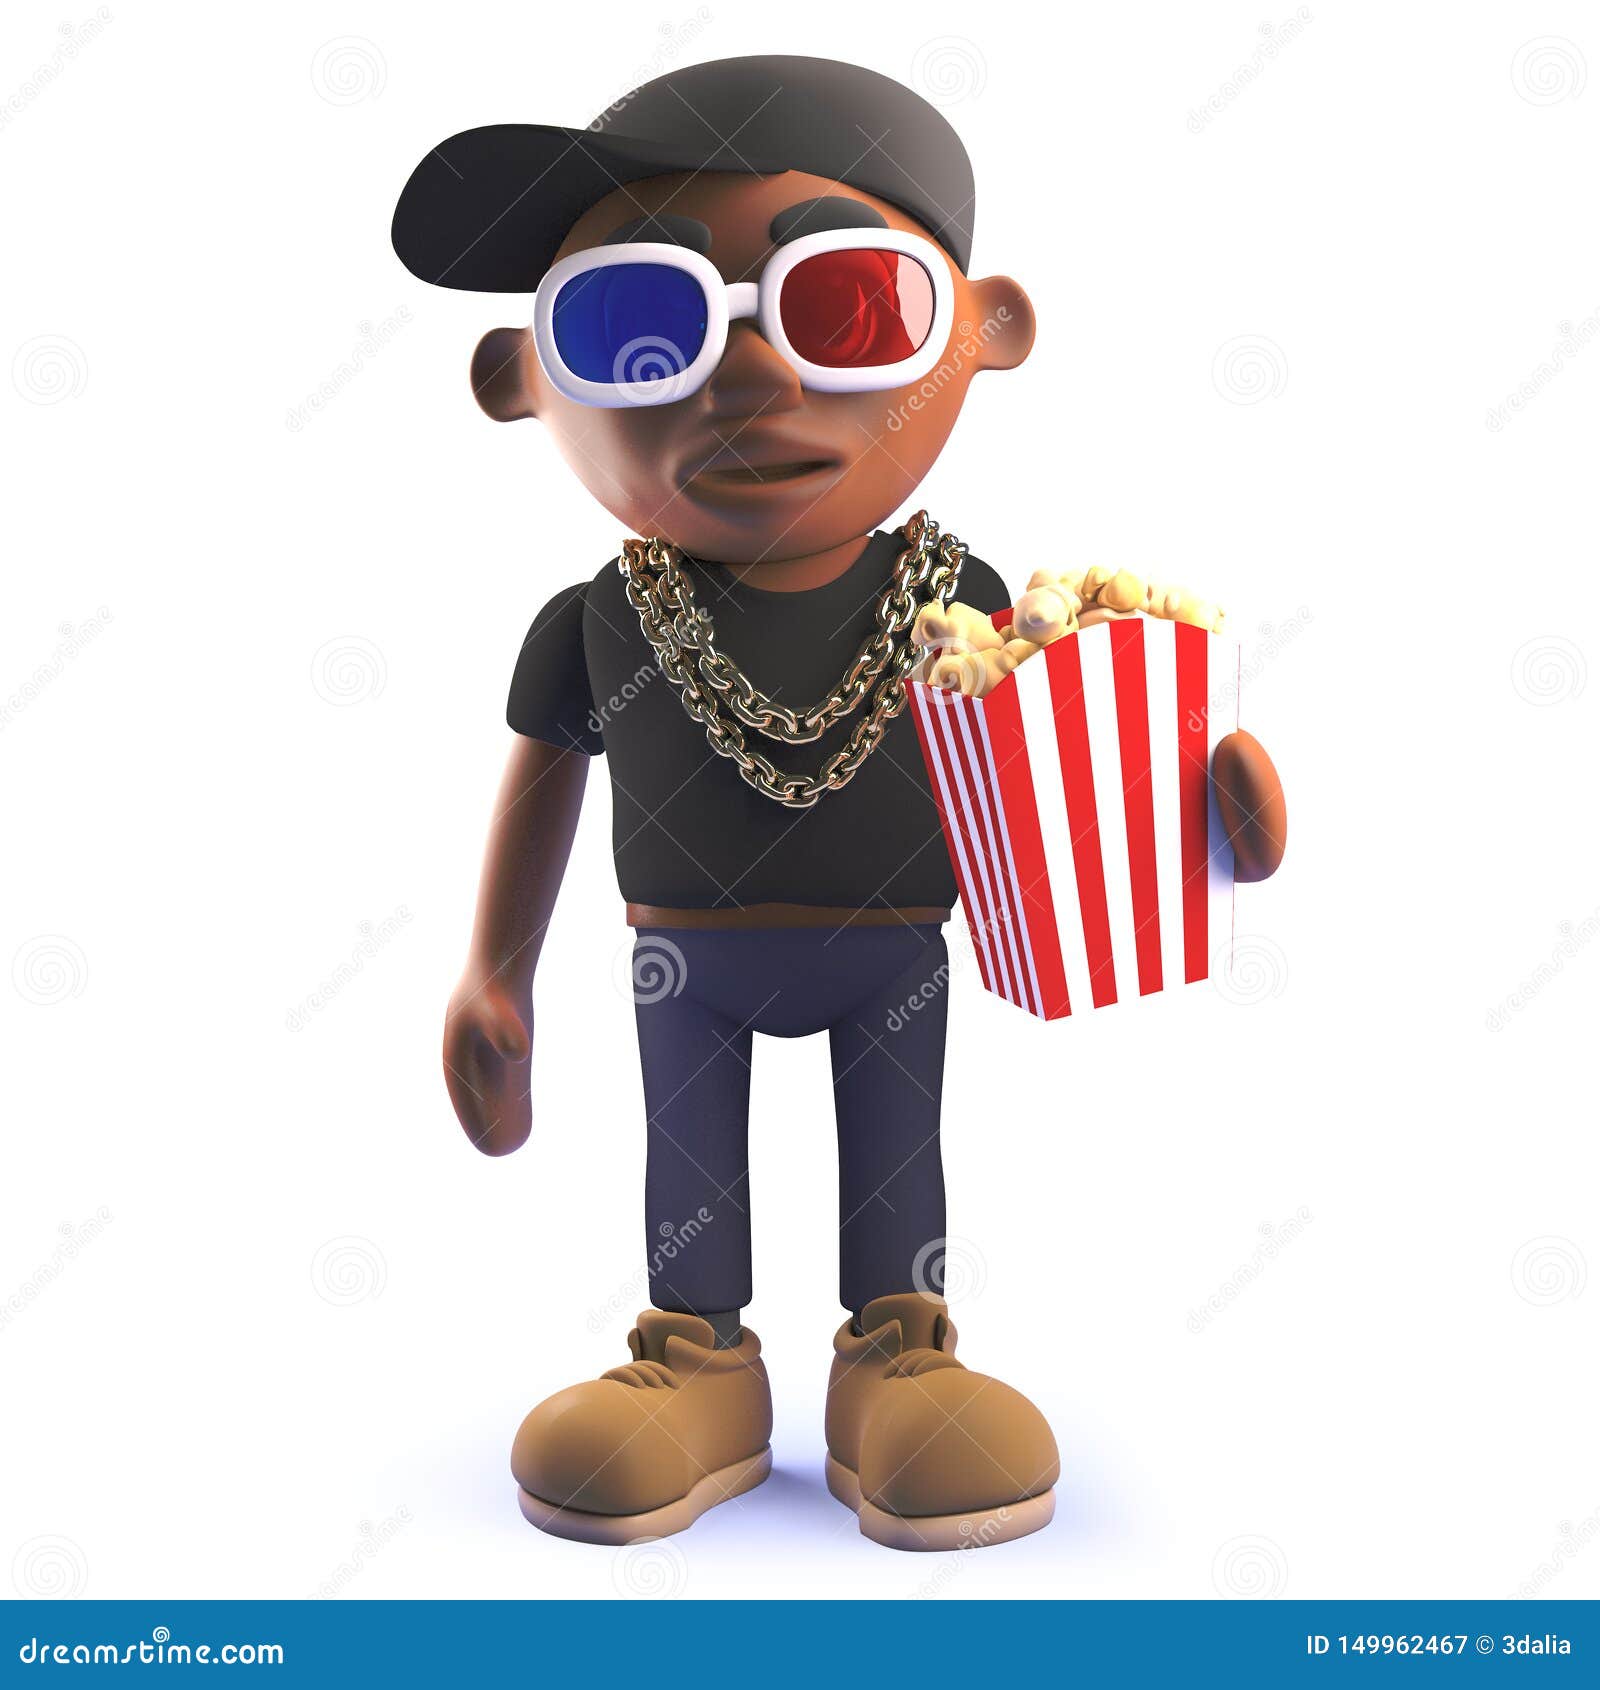 Black Hip Hop Rapper Cartoon Character in 3d Wearing 3d Glasses and Eating  Popcorn Stock Illustration - Illustration of glasses, diversity: 149962467